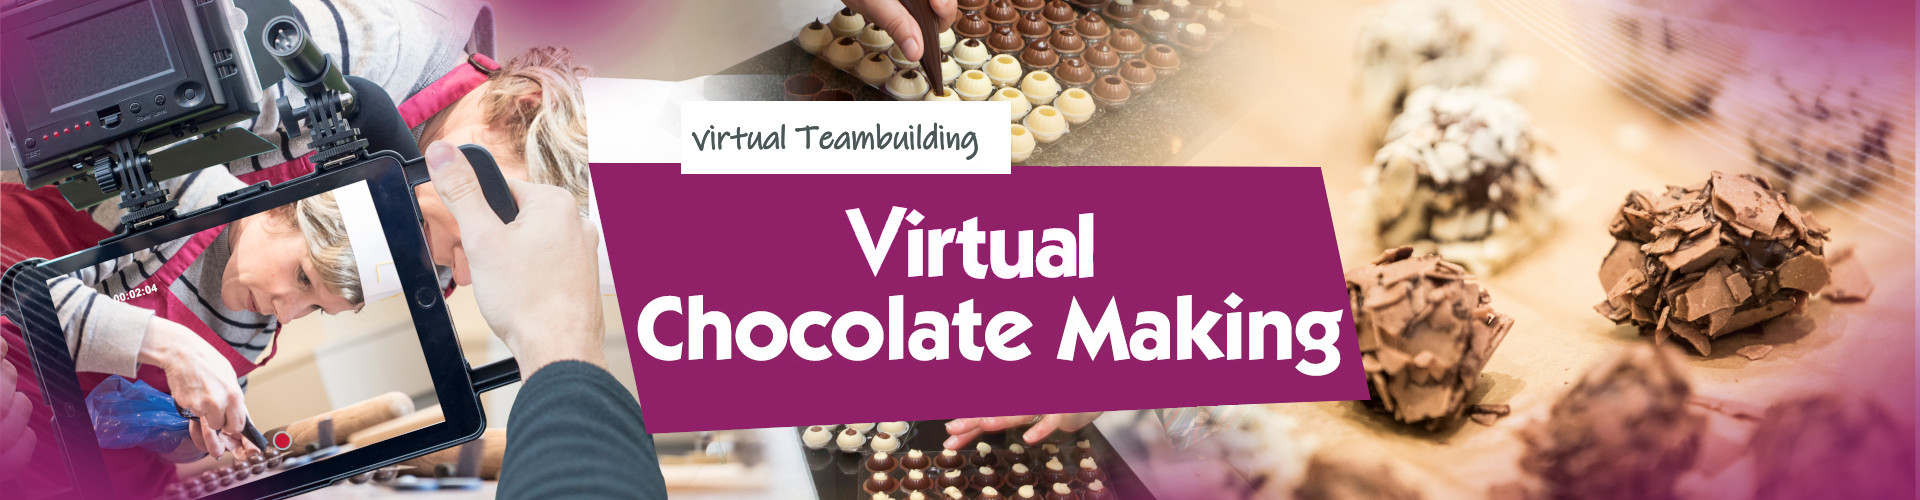 Virtual Chocolate Making - Banner